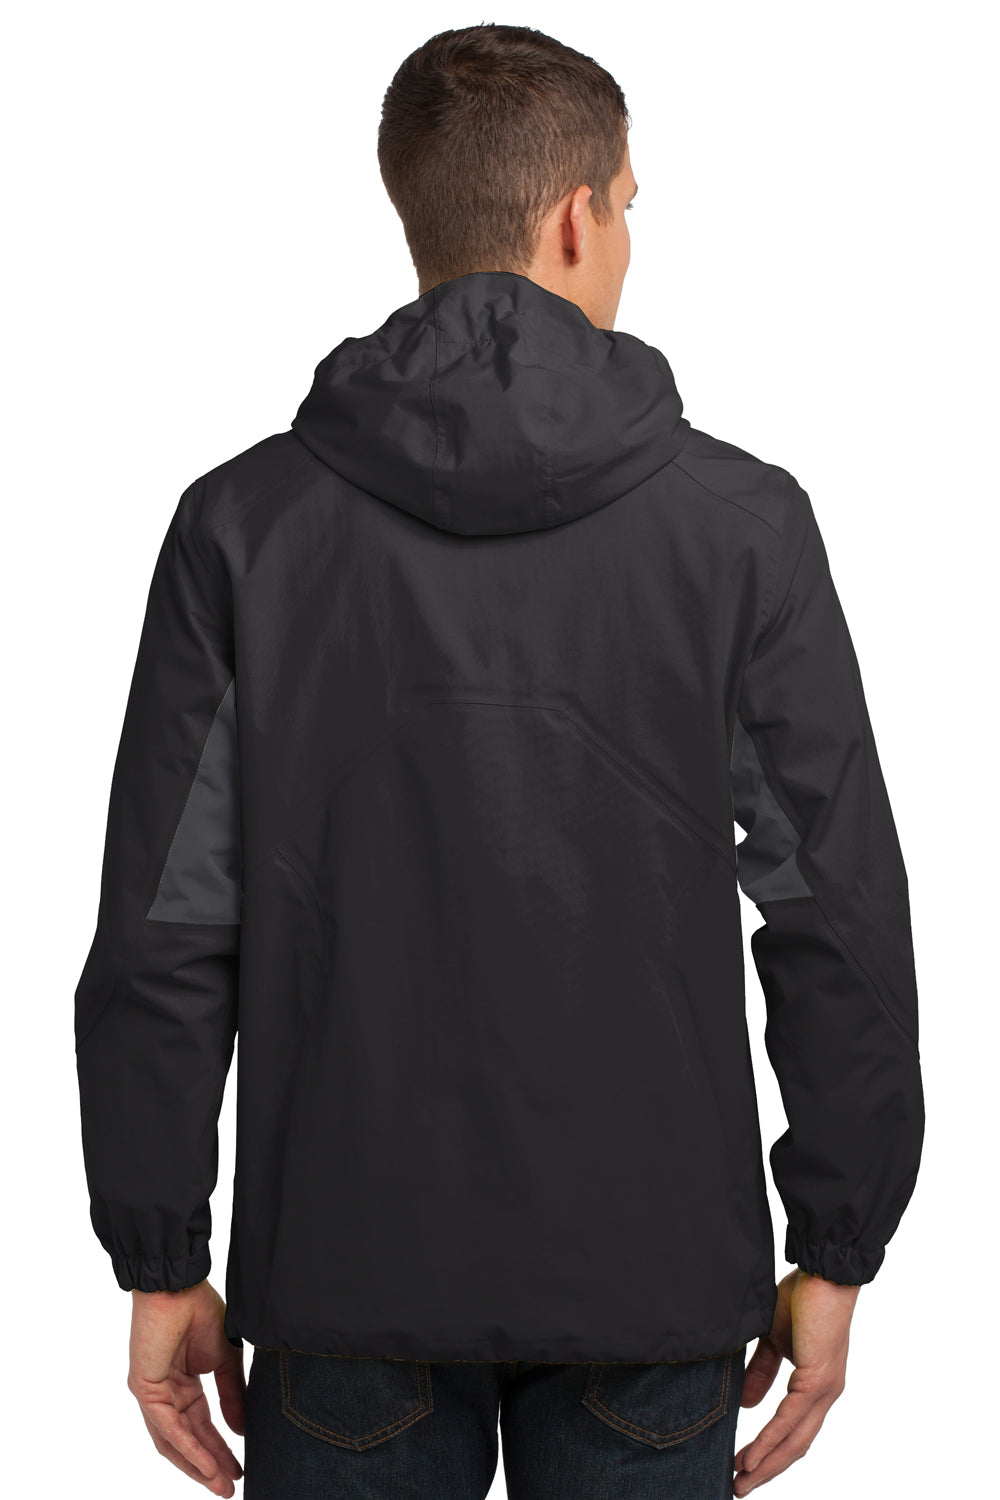 Port Authority J322 Mens Cascade Waterproof Full Zip Hooded Jacket Black/Grey Back